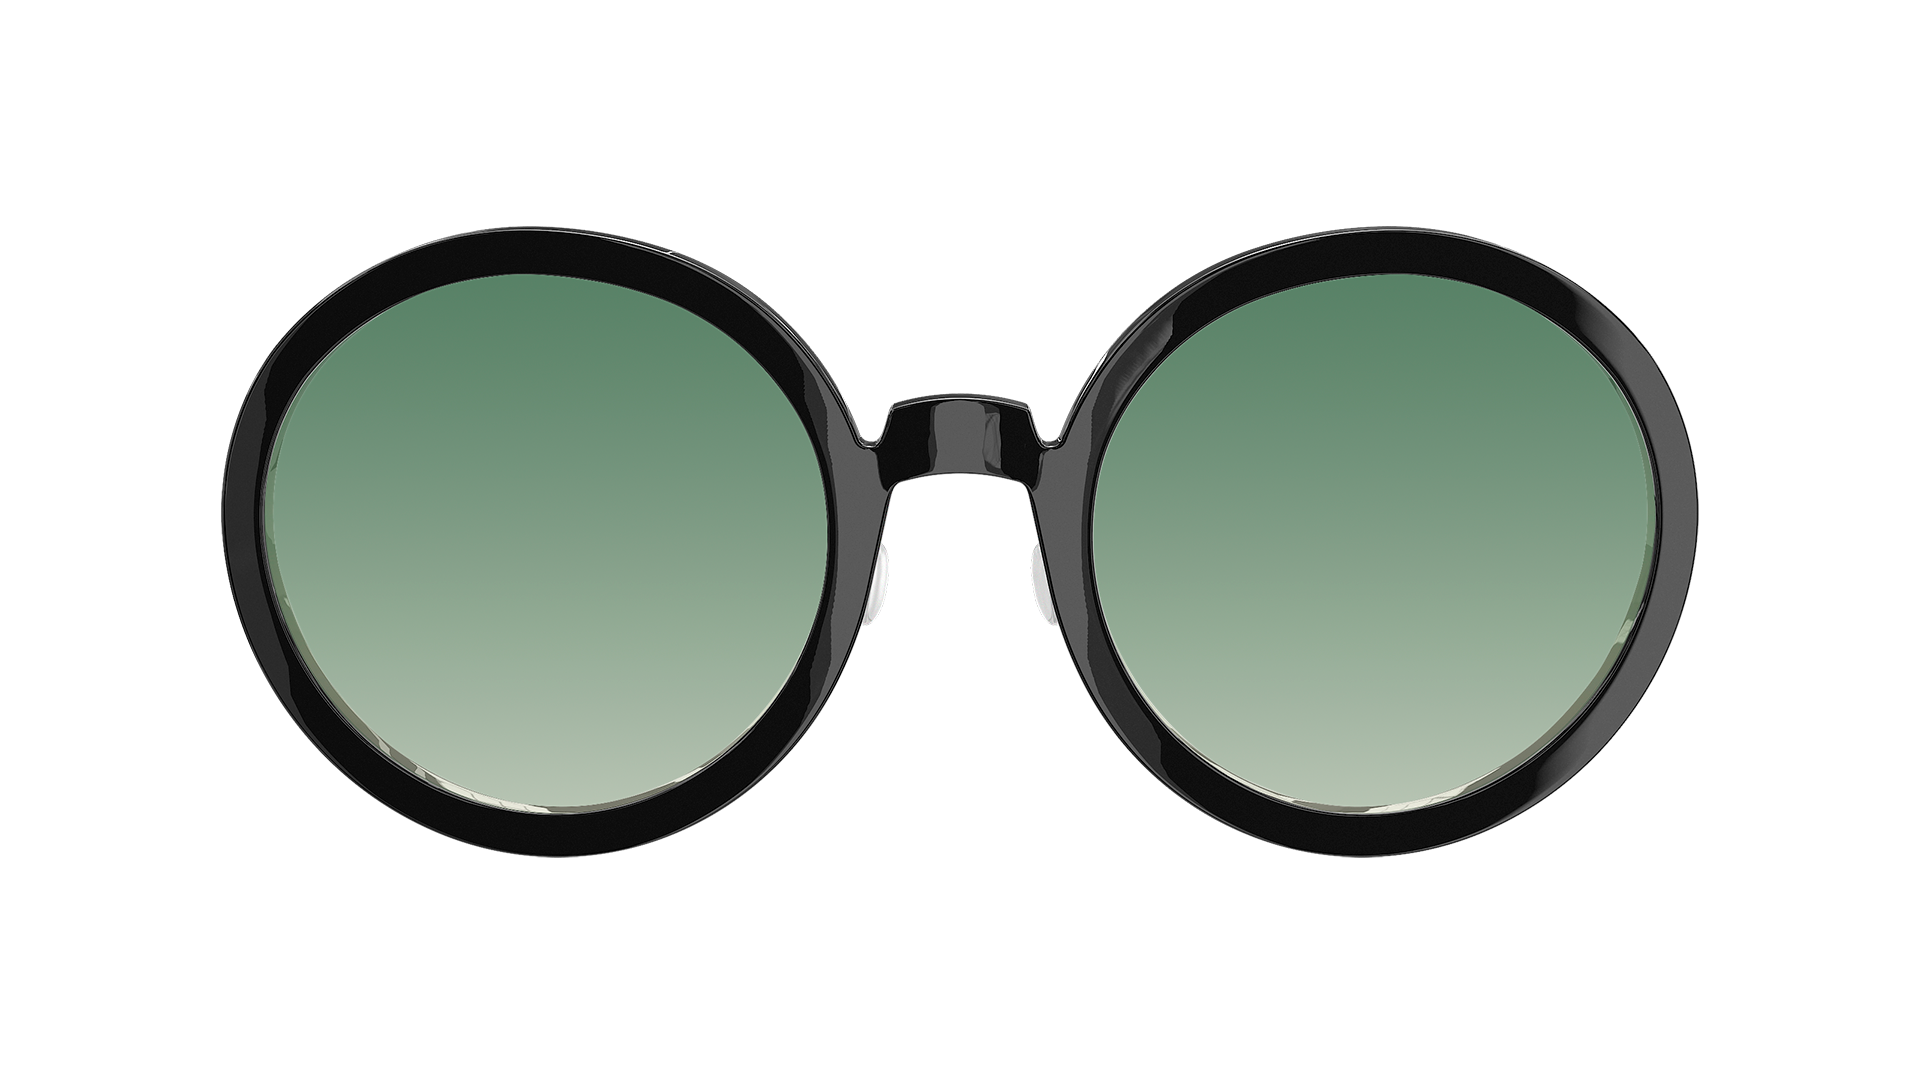 LINDBERG sun titanium Model 8586 oversized round shape sunglasses with green tinted lenses